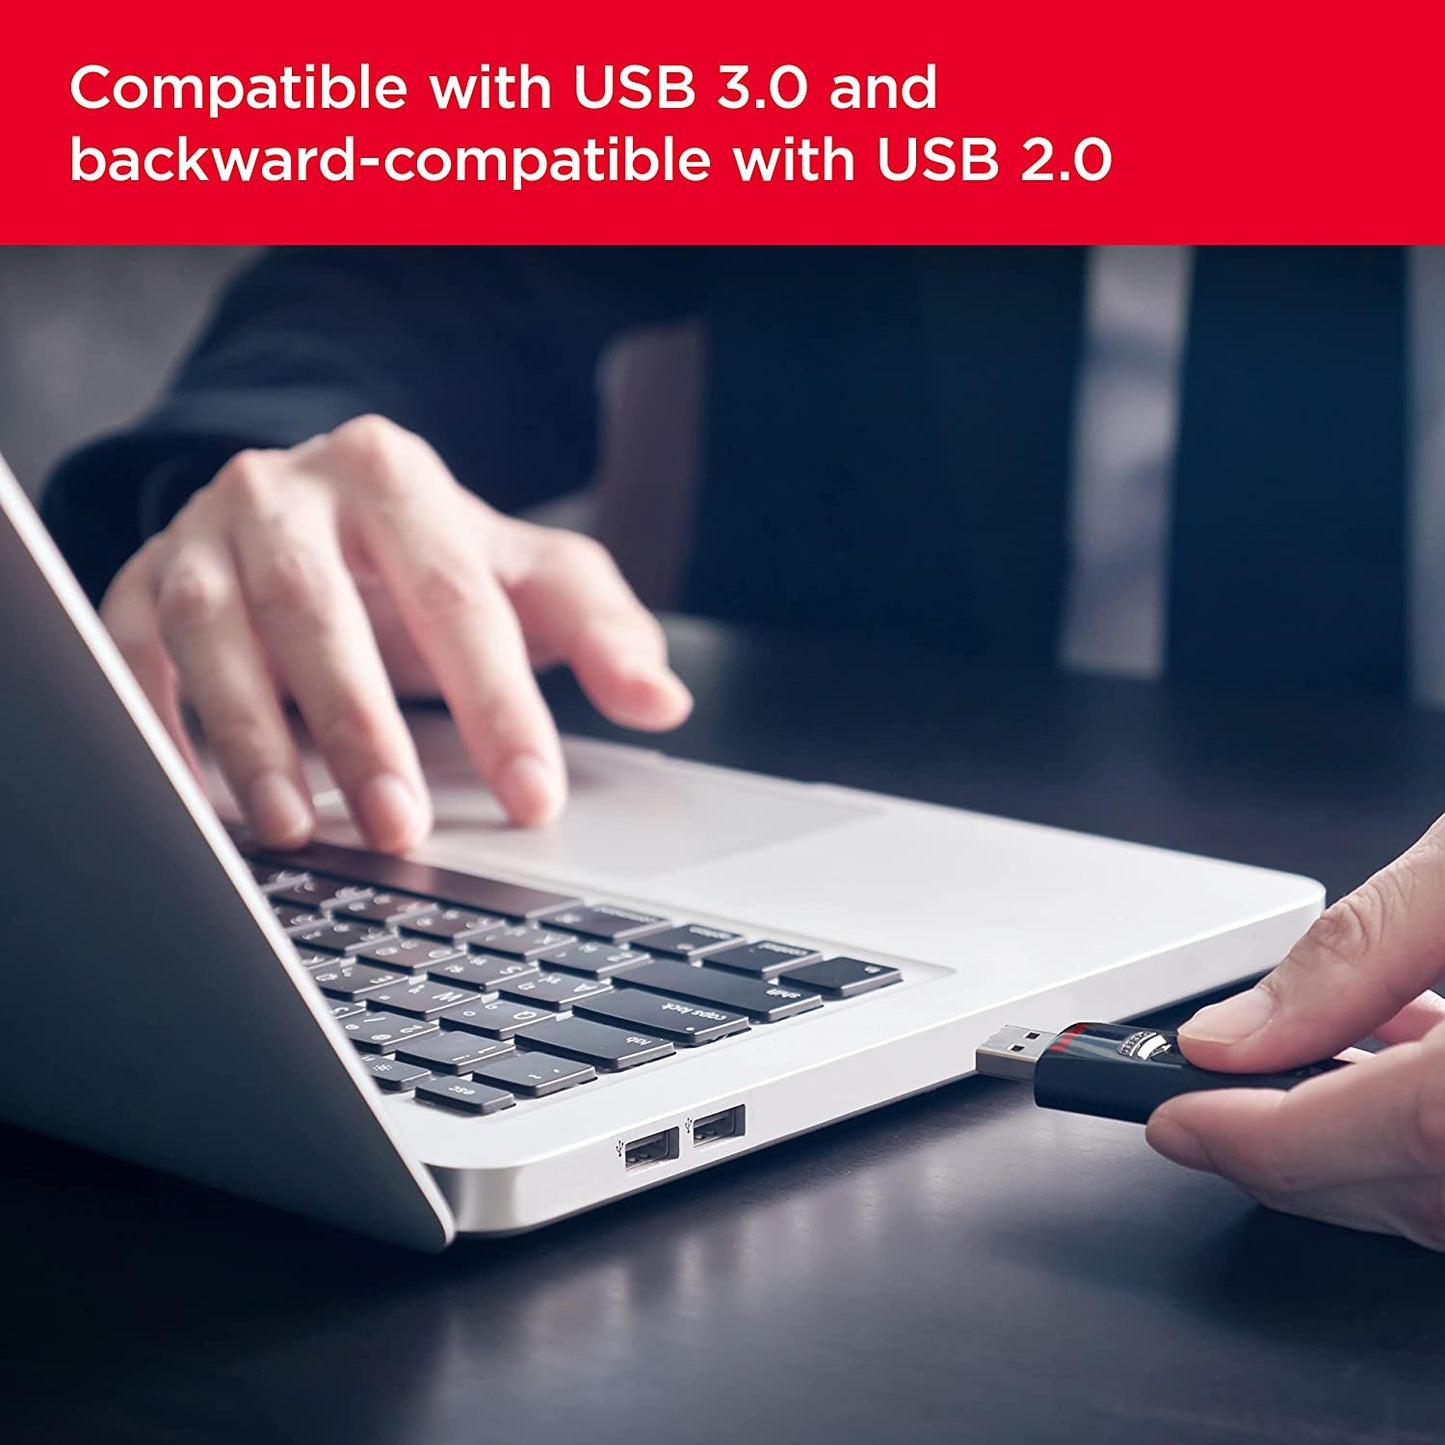 512GB Ultra USB 3.0 Flash Drive - SDCZ48-512G-G46, Black